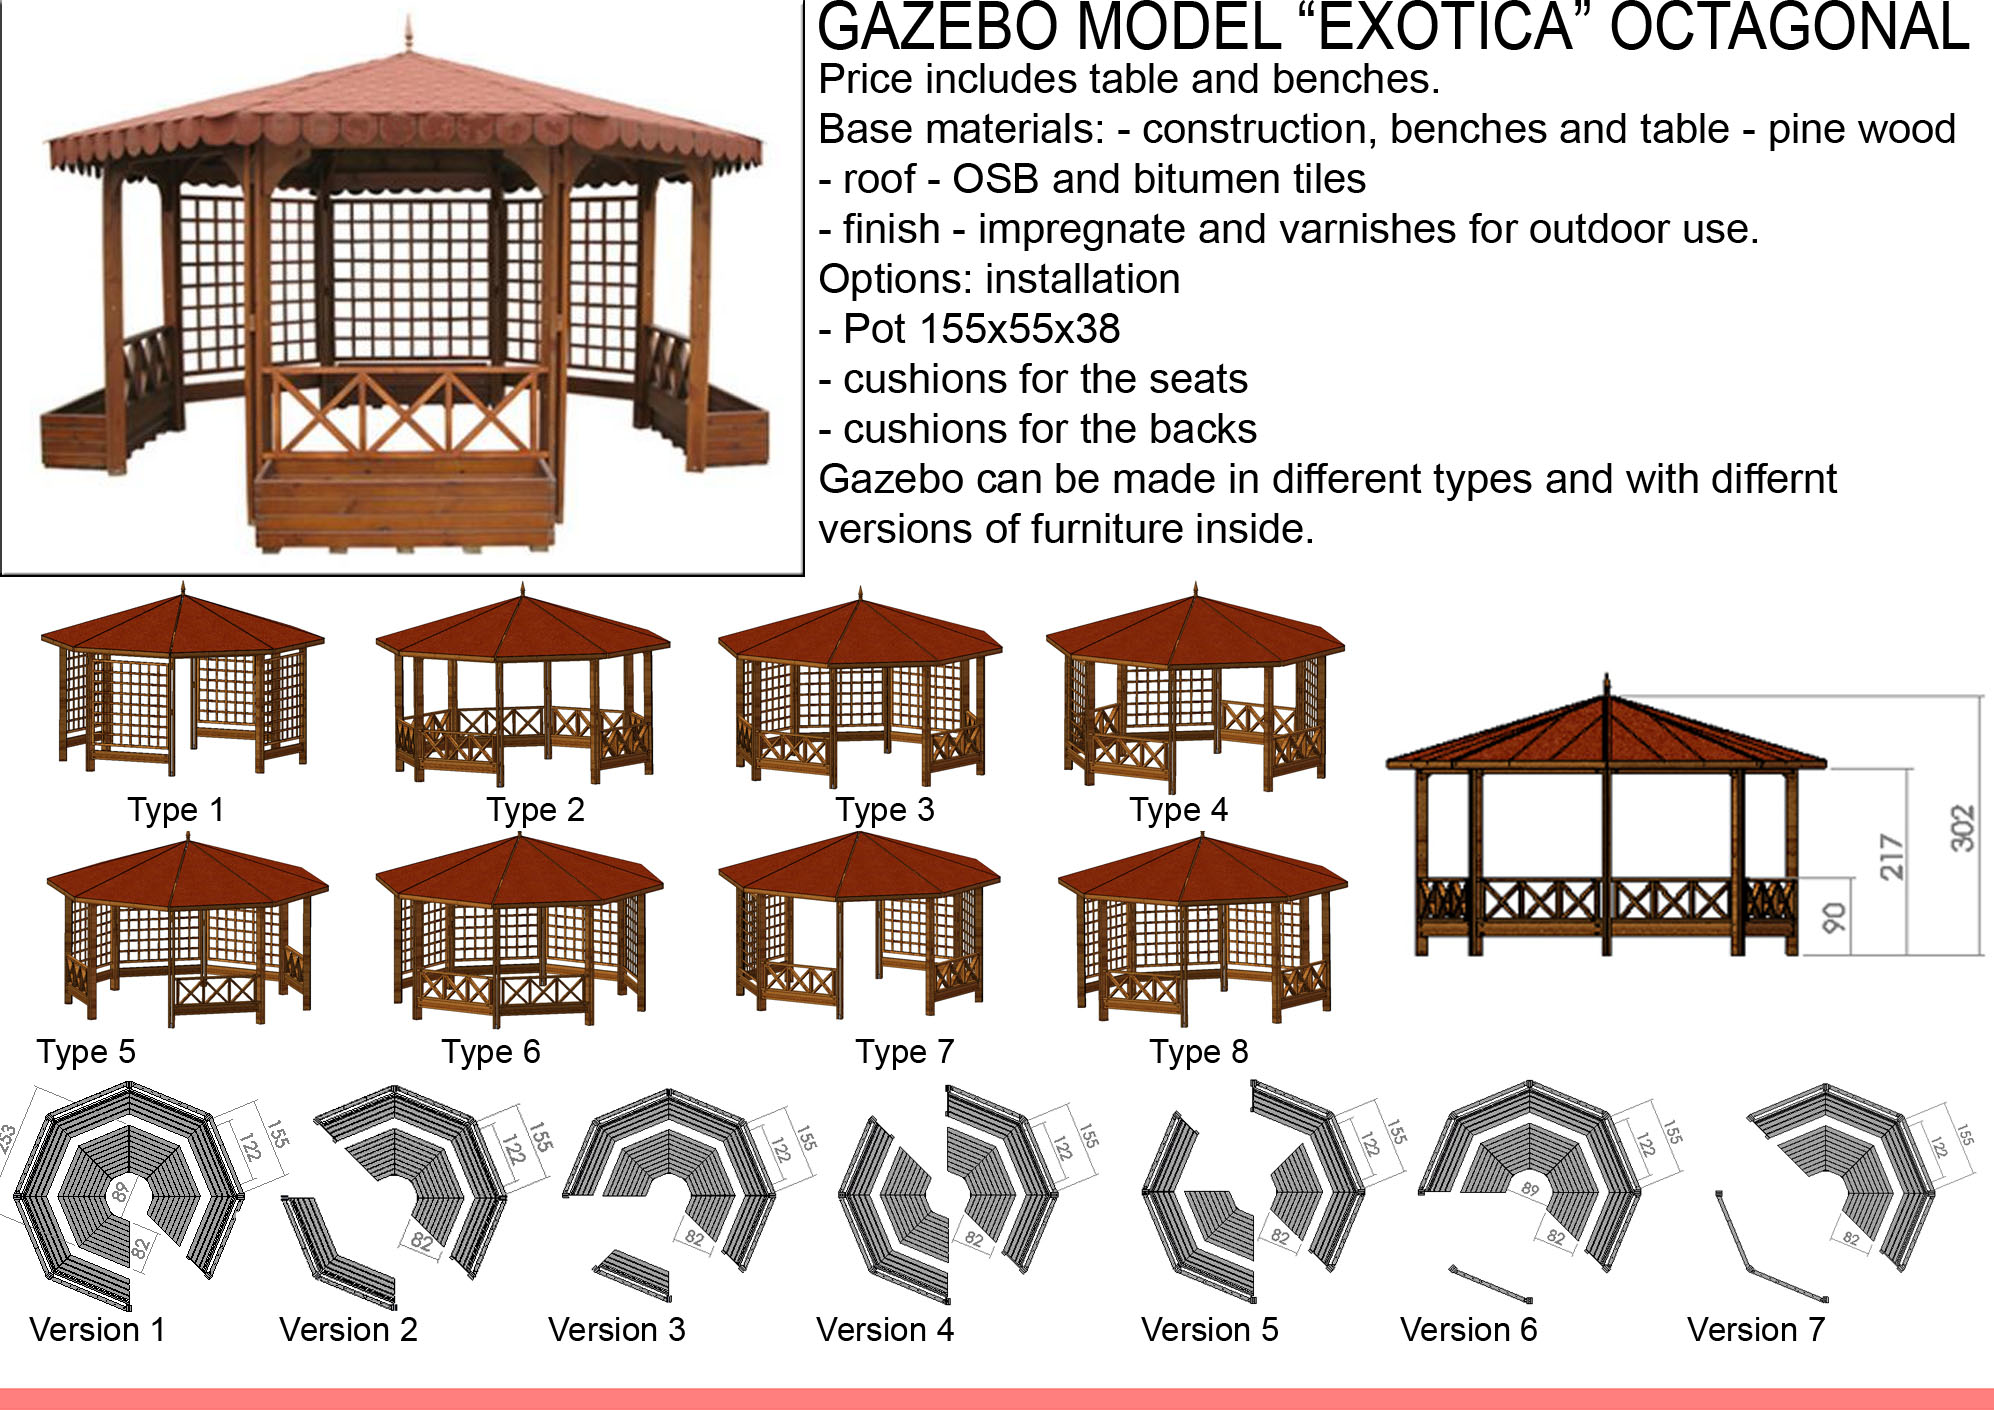 Gazebo Exotica Octagonal